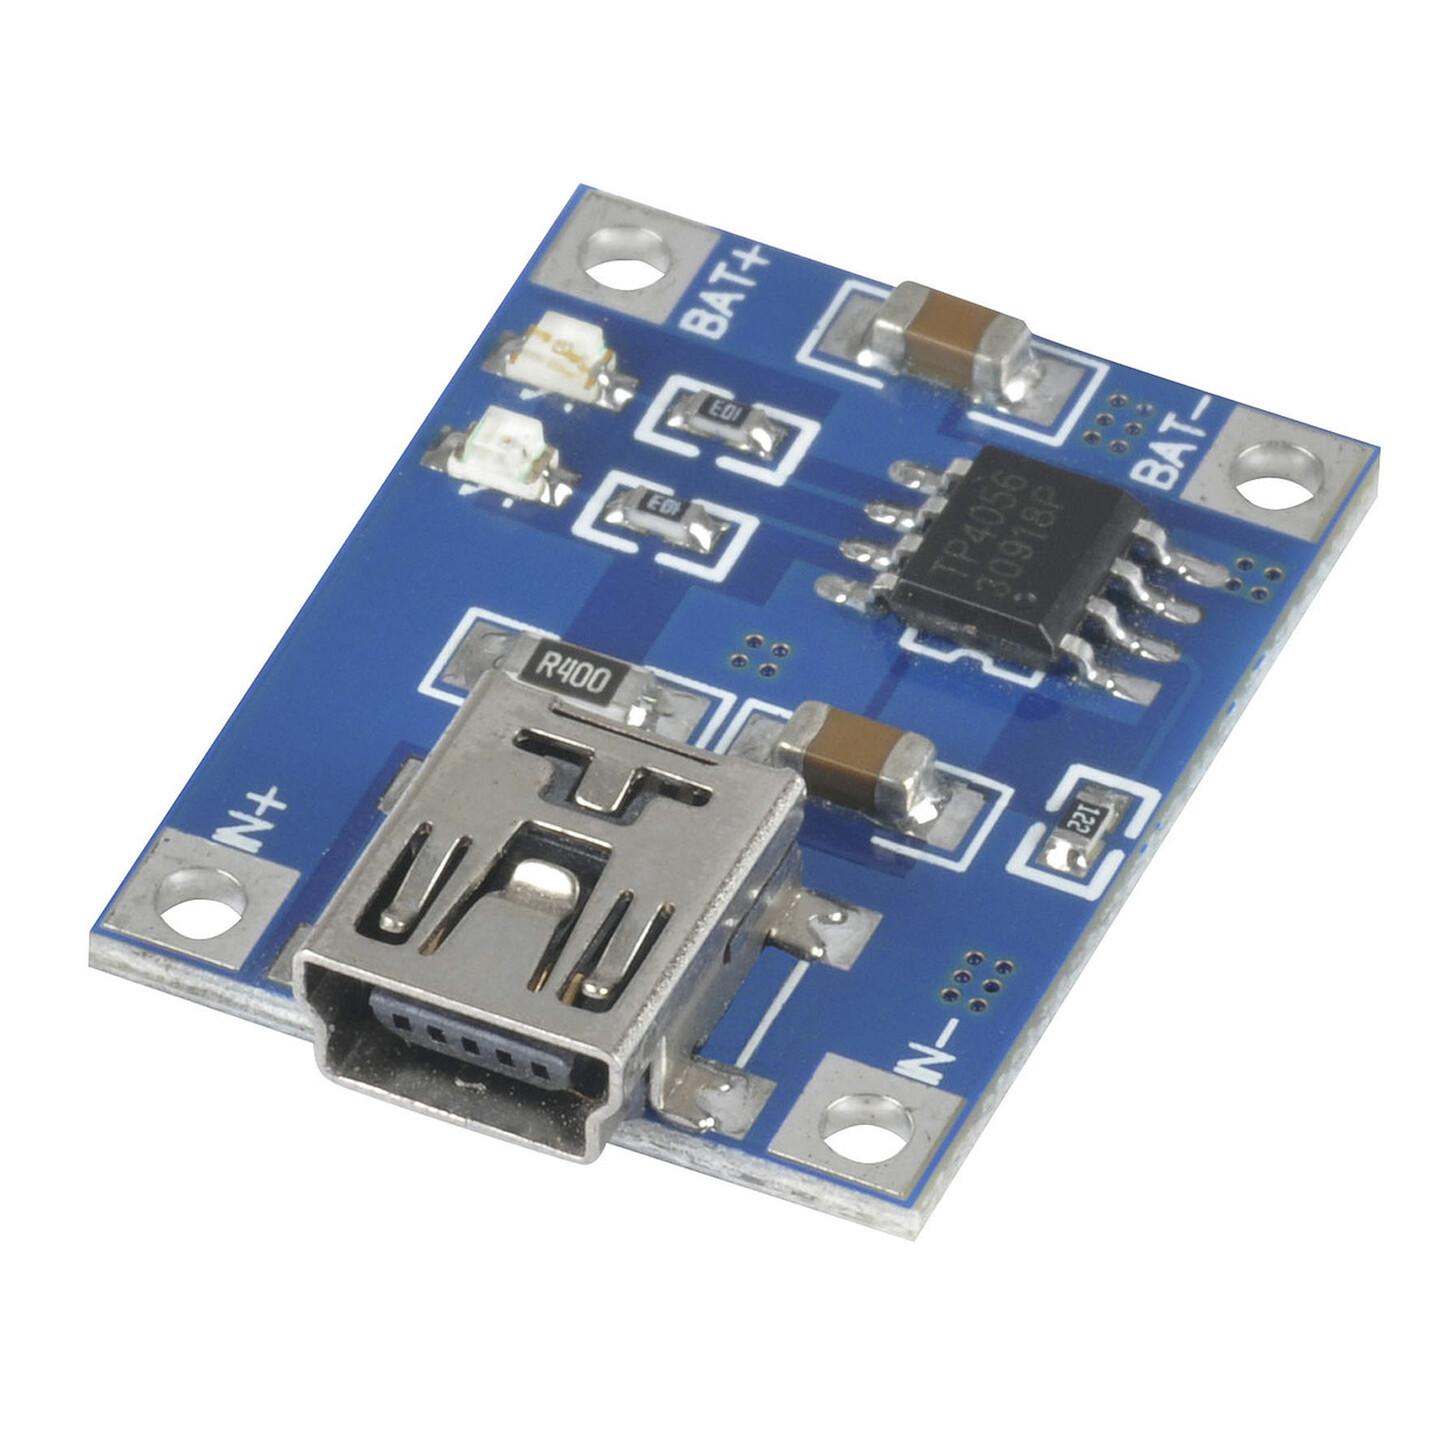 Duinotech Arduino Compatible Lithium Battery USB Charger Module